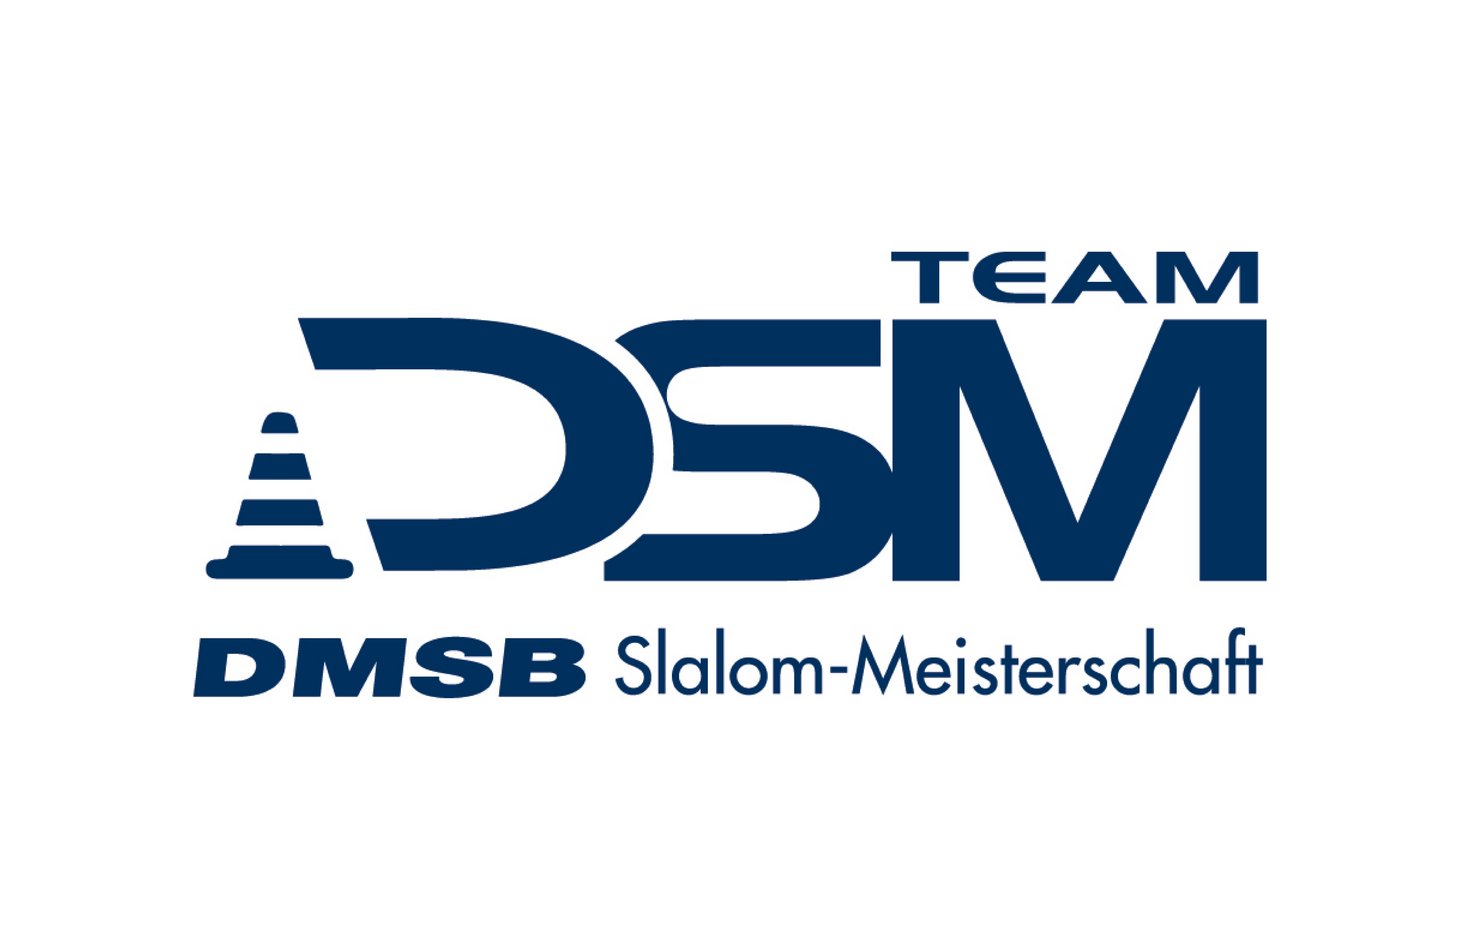 Csm DMSB Slalom Team Meisterschaft 978ed6b901 